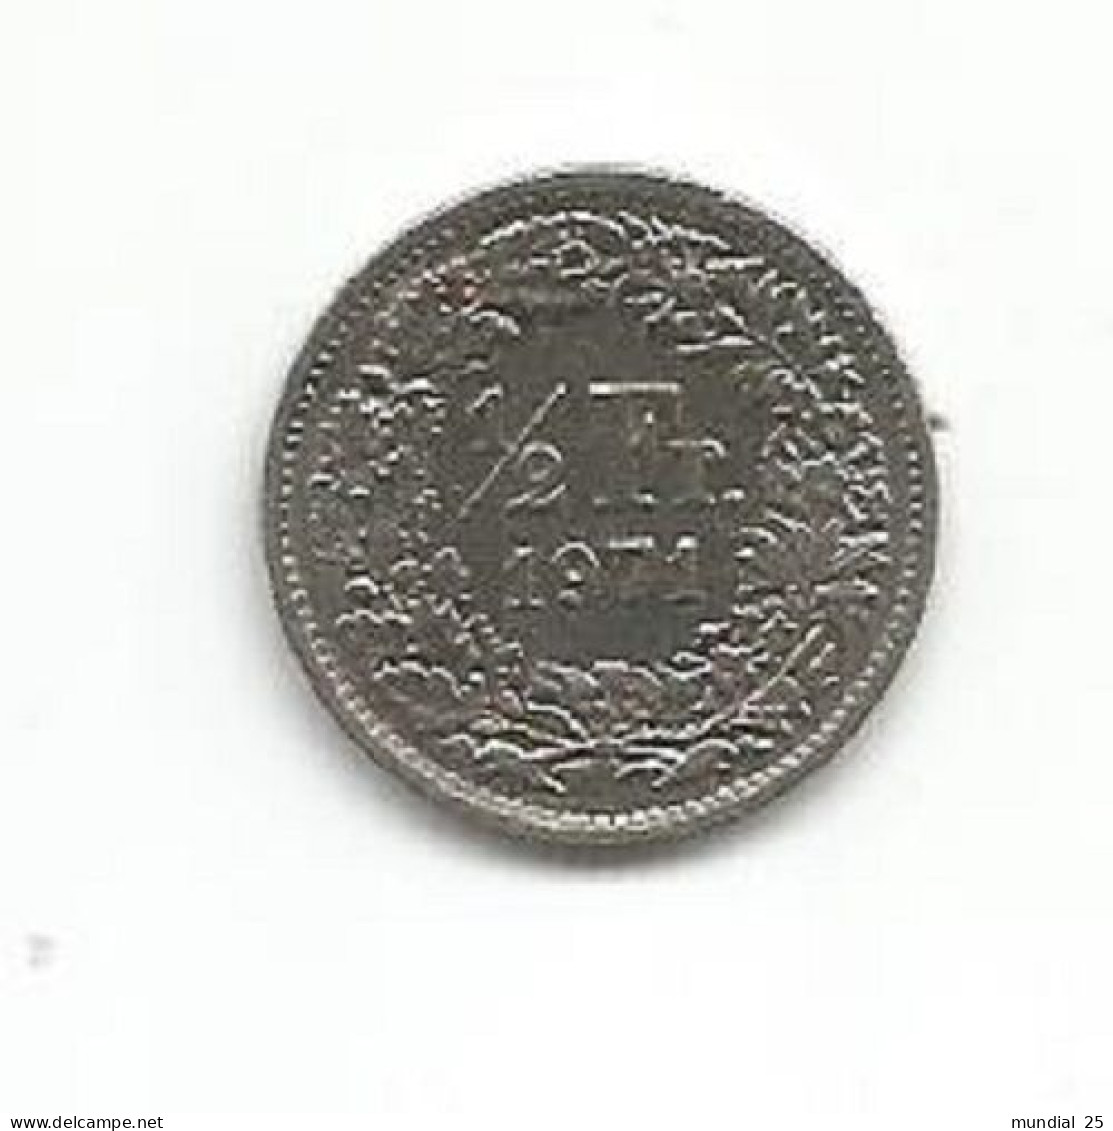 SWITZERLAND 1/2 FRANC 1971 - 1/2 Franken